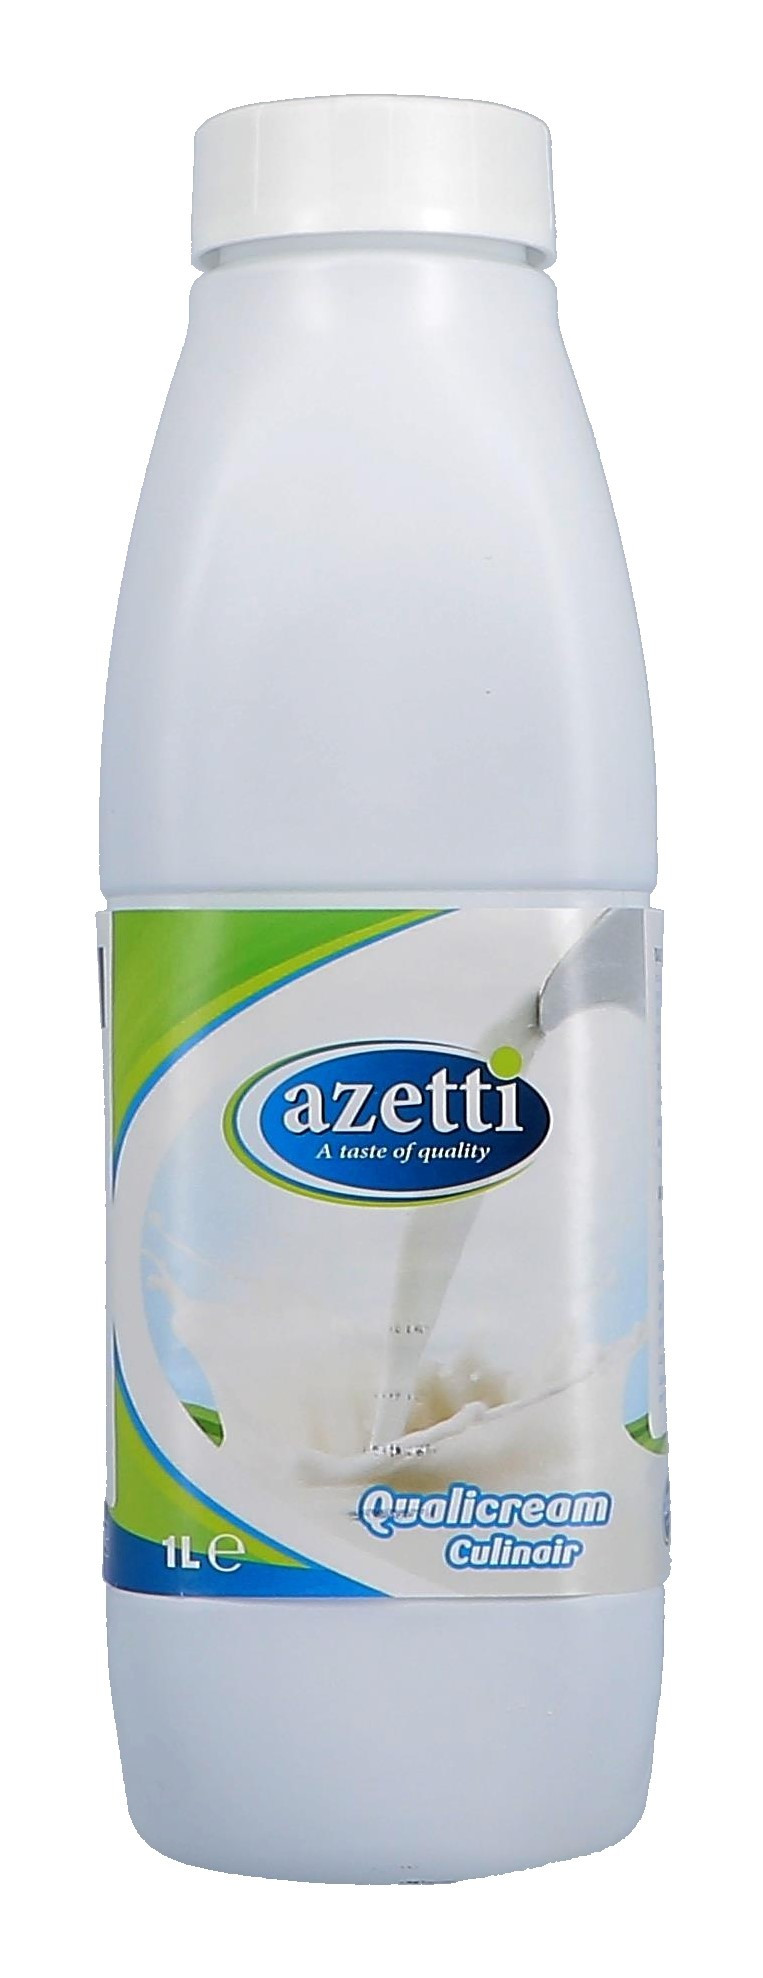 Azetti Quali Cream 1L Culinaire Room (Ei- & Room producten)